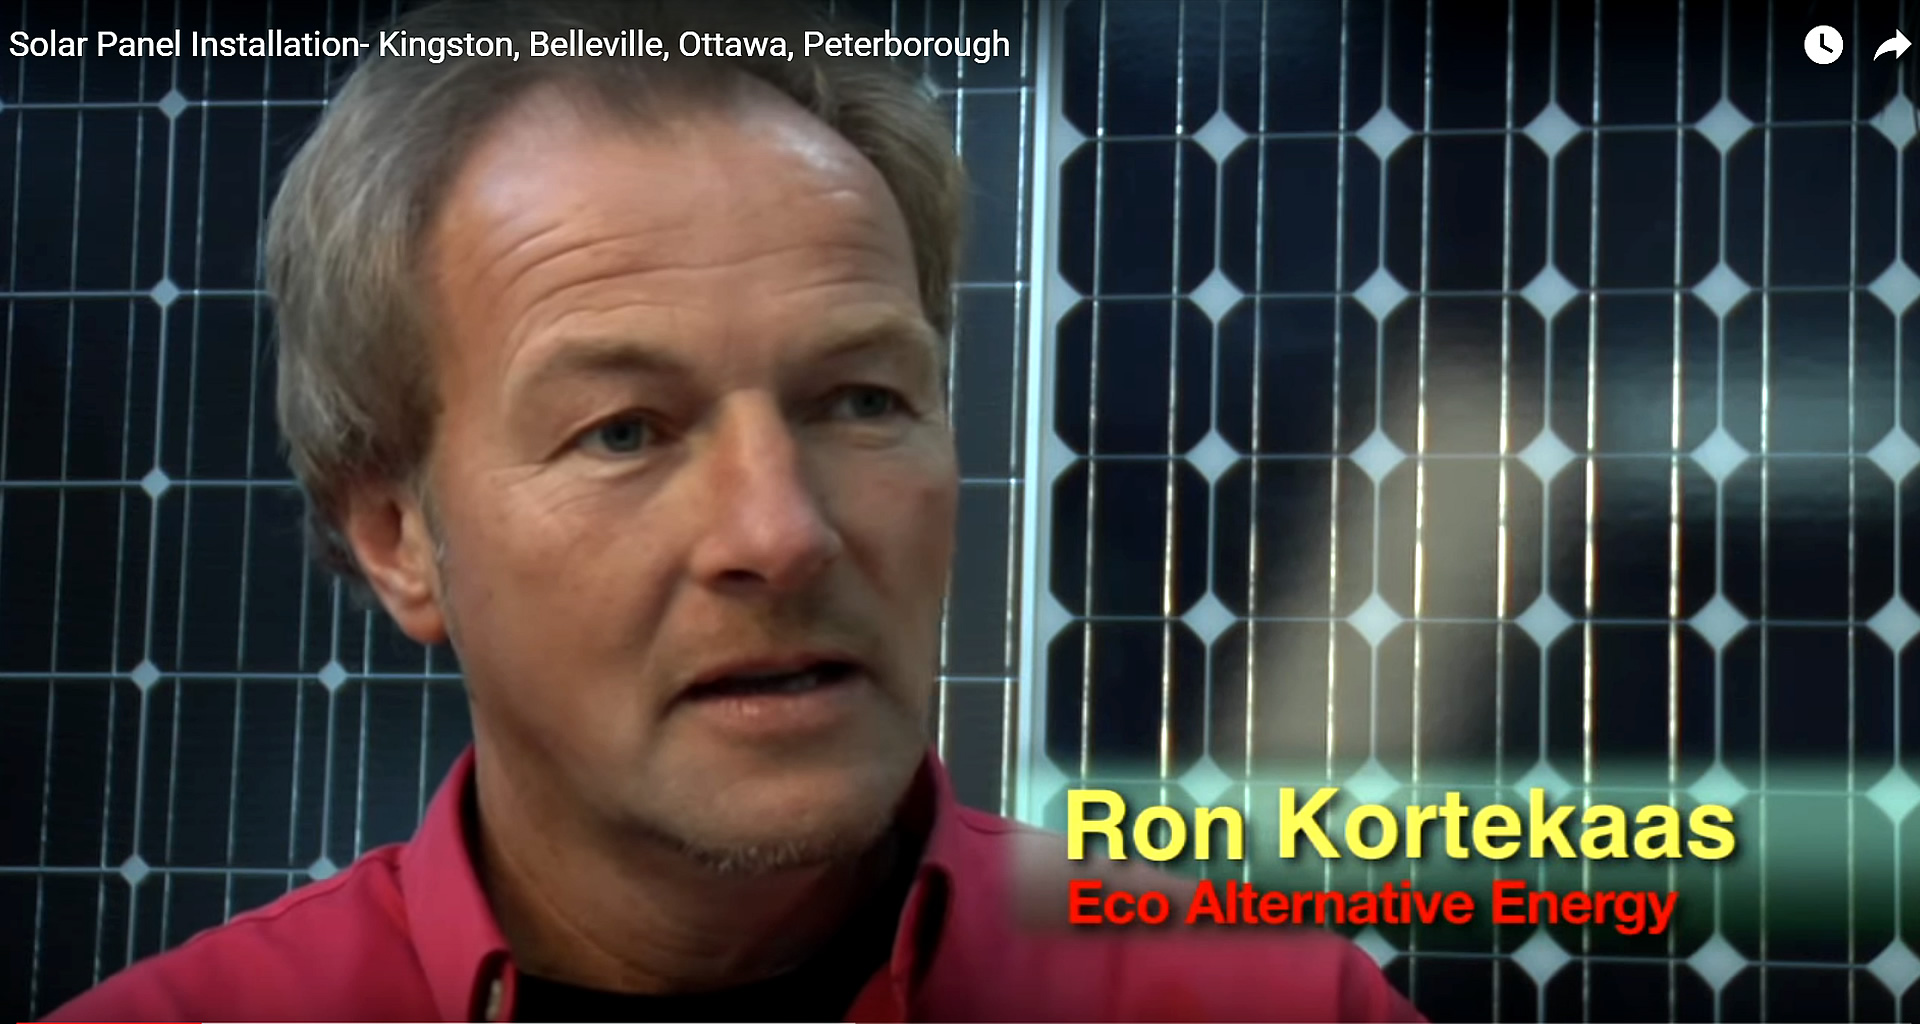 Eco Alternative Energy - Ron Kortekaas, Co-Owner